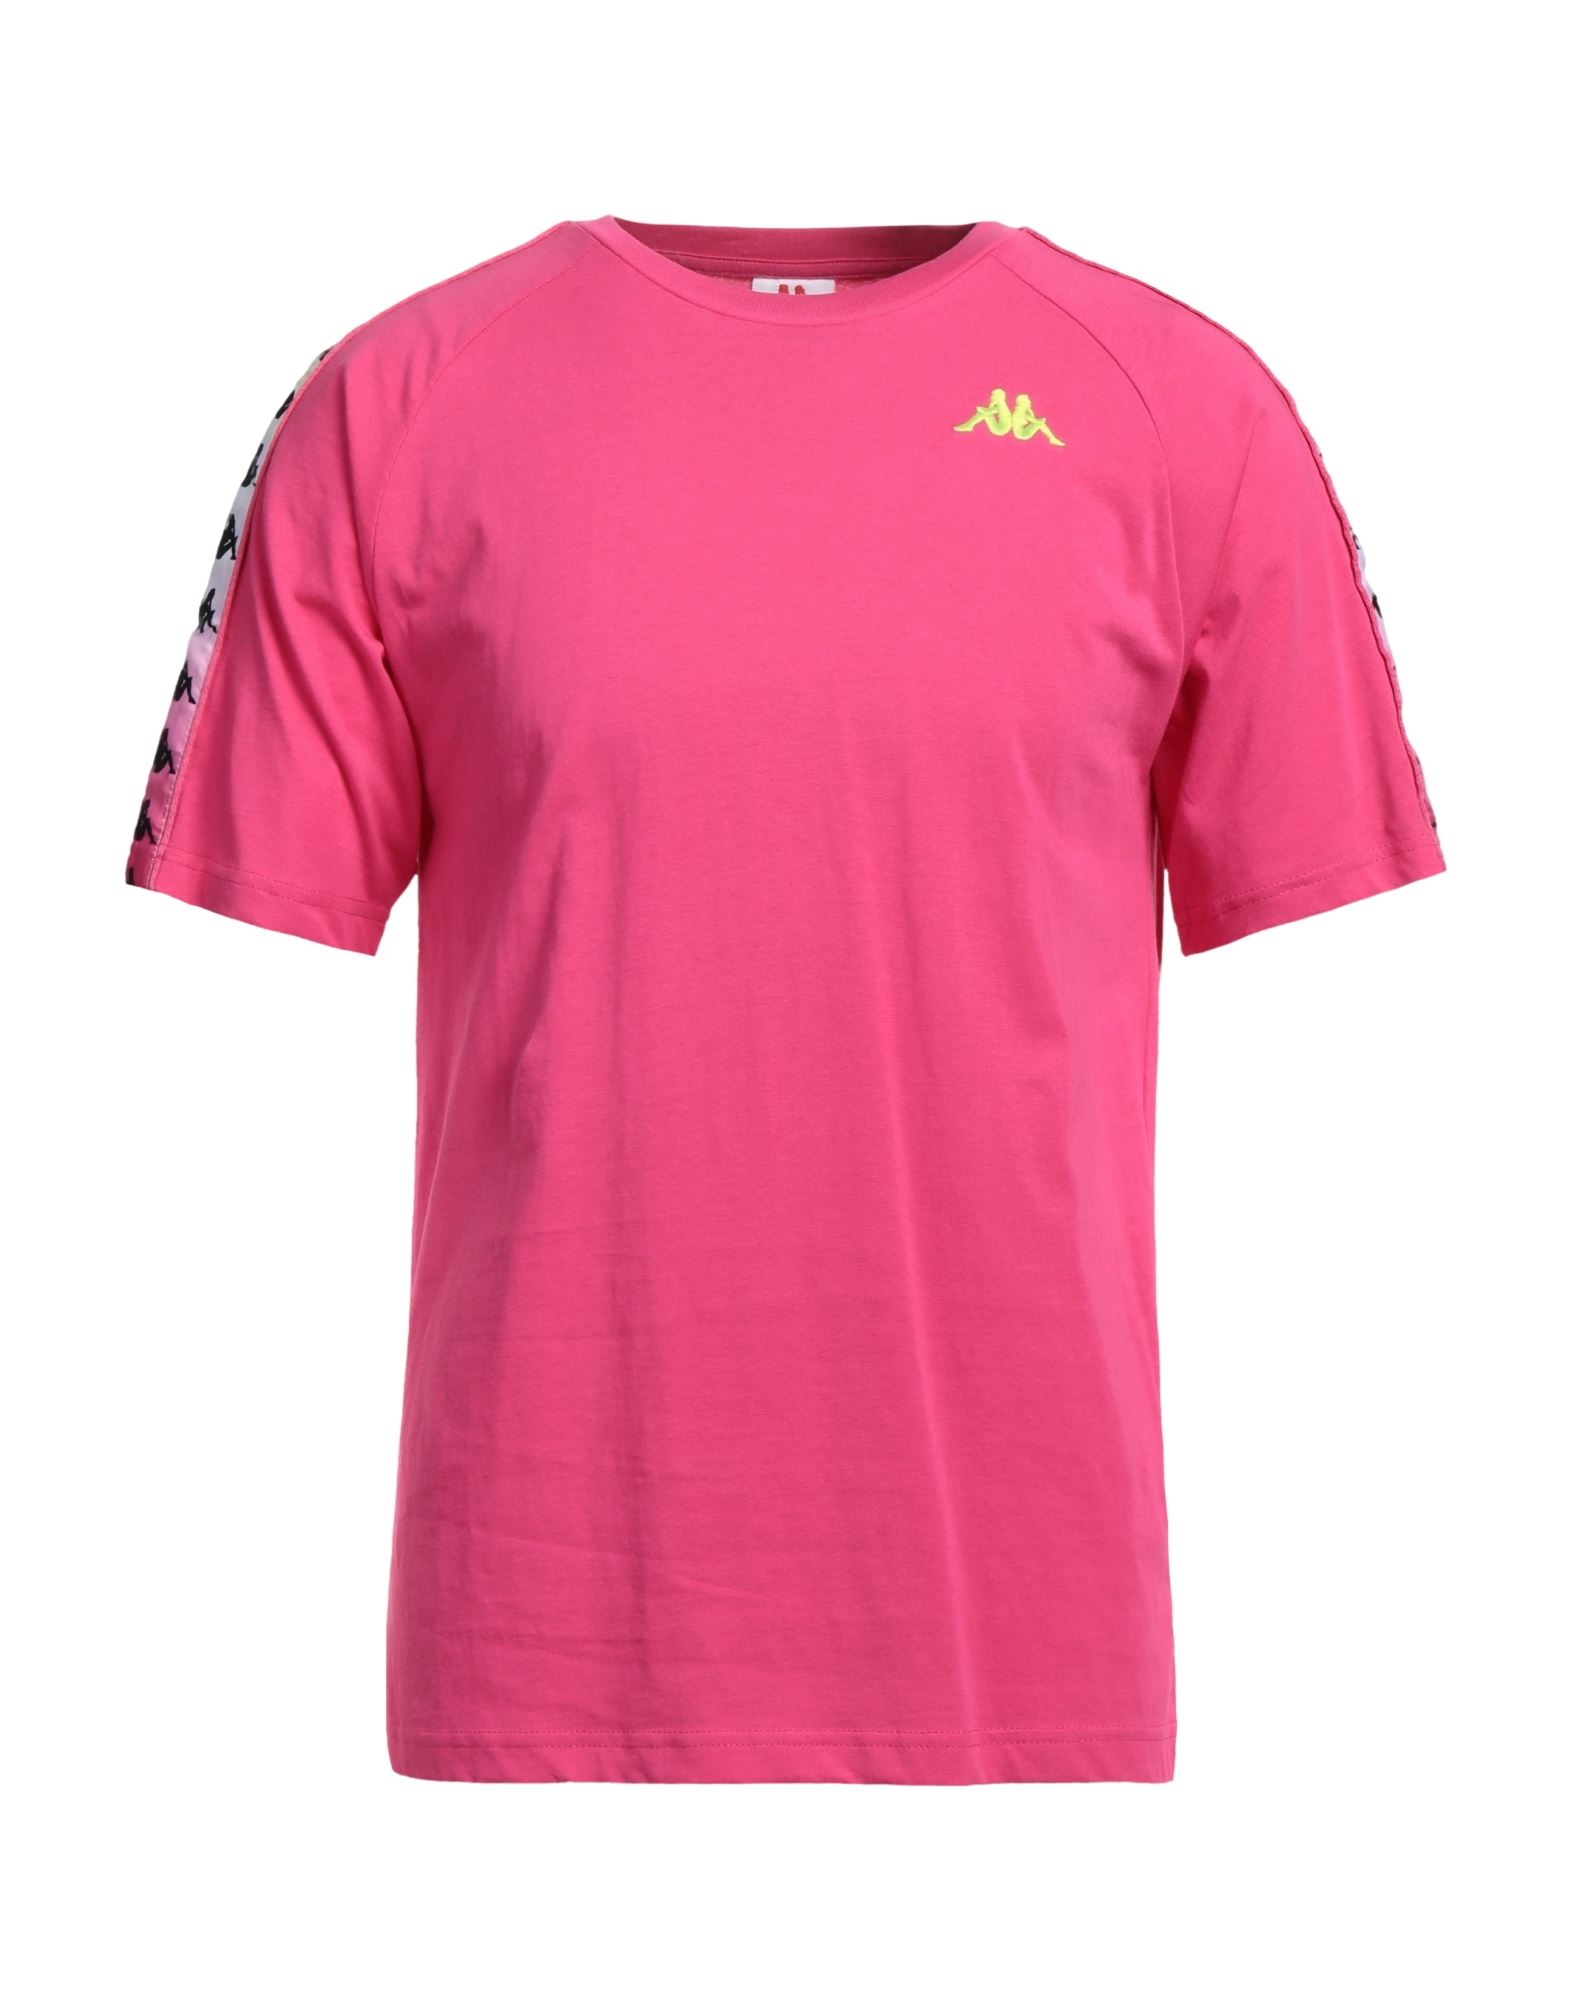 Kappa T-shirts In Pink